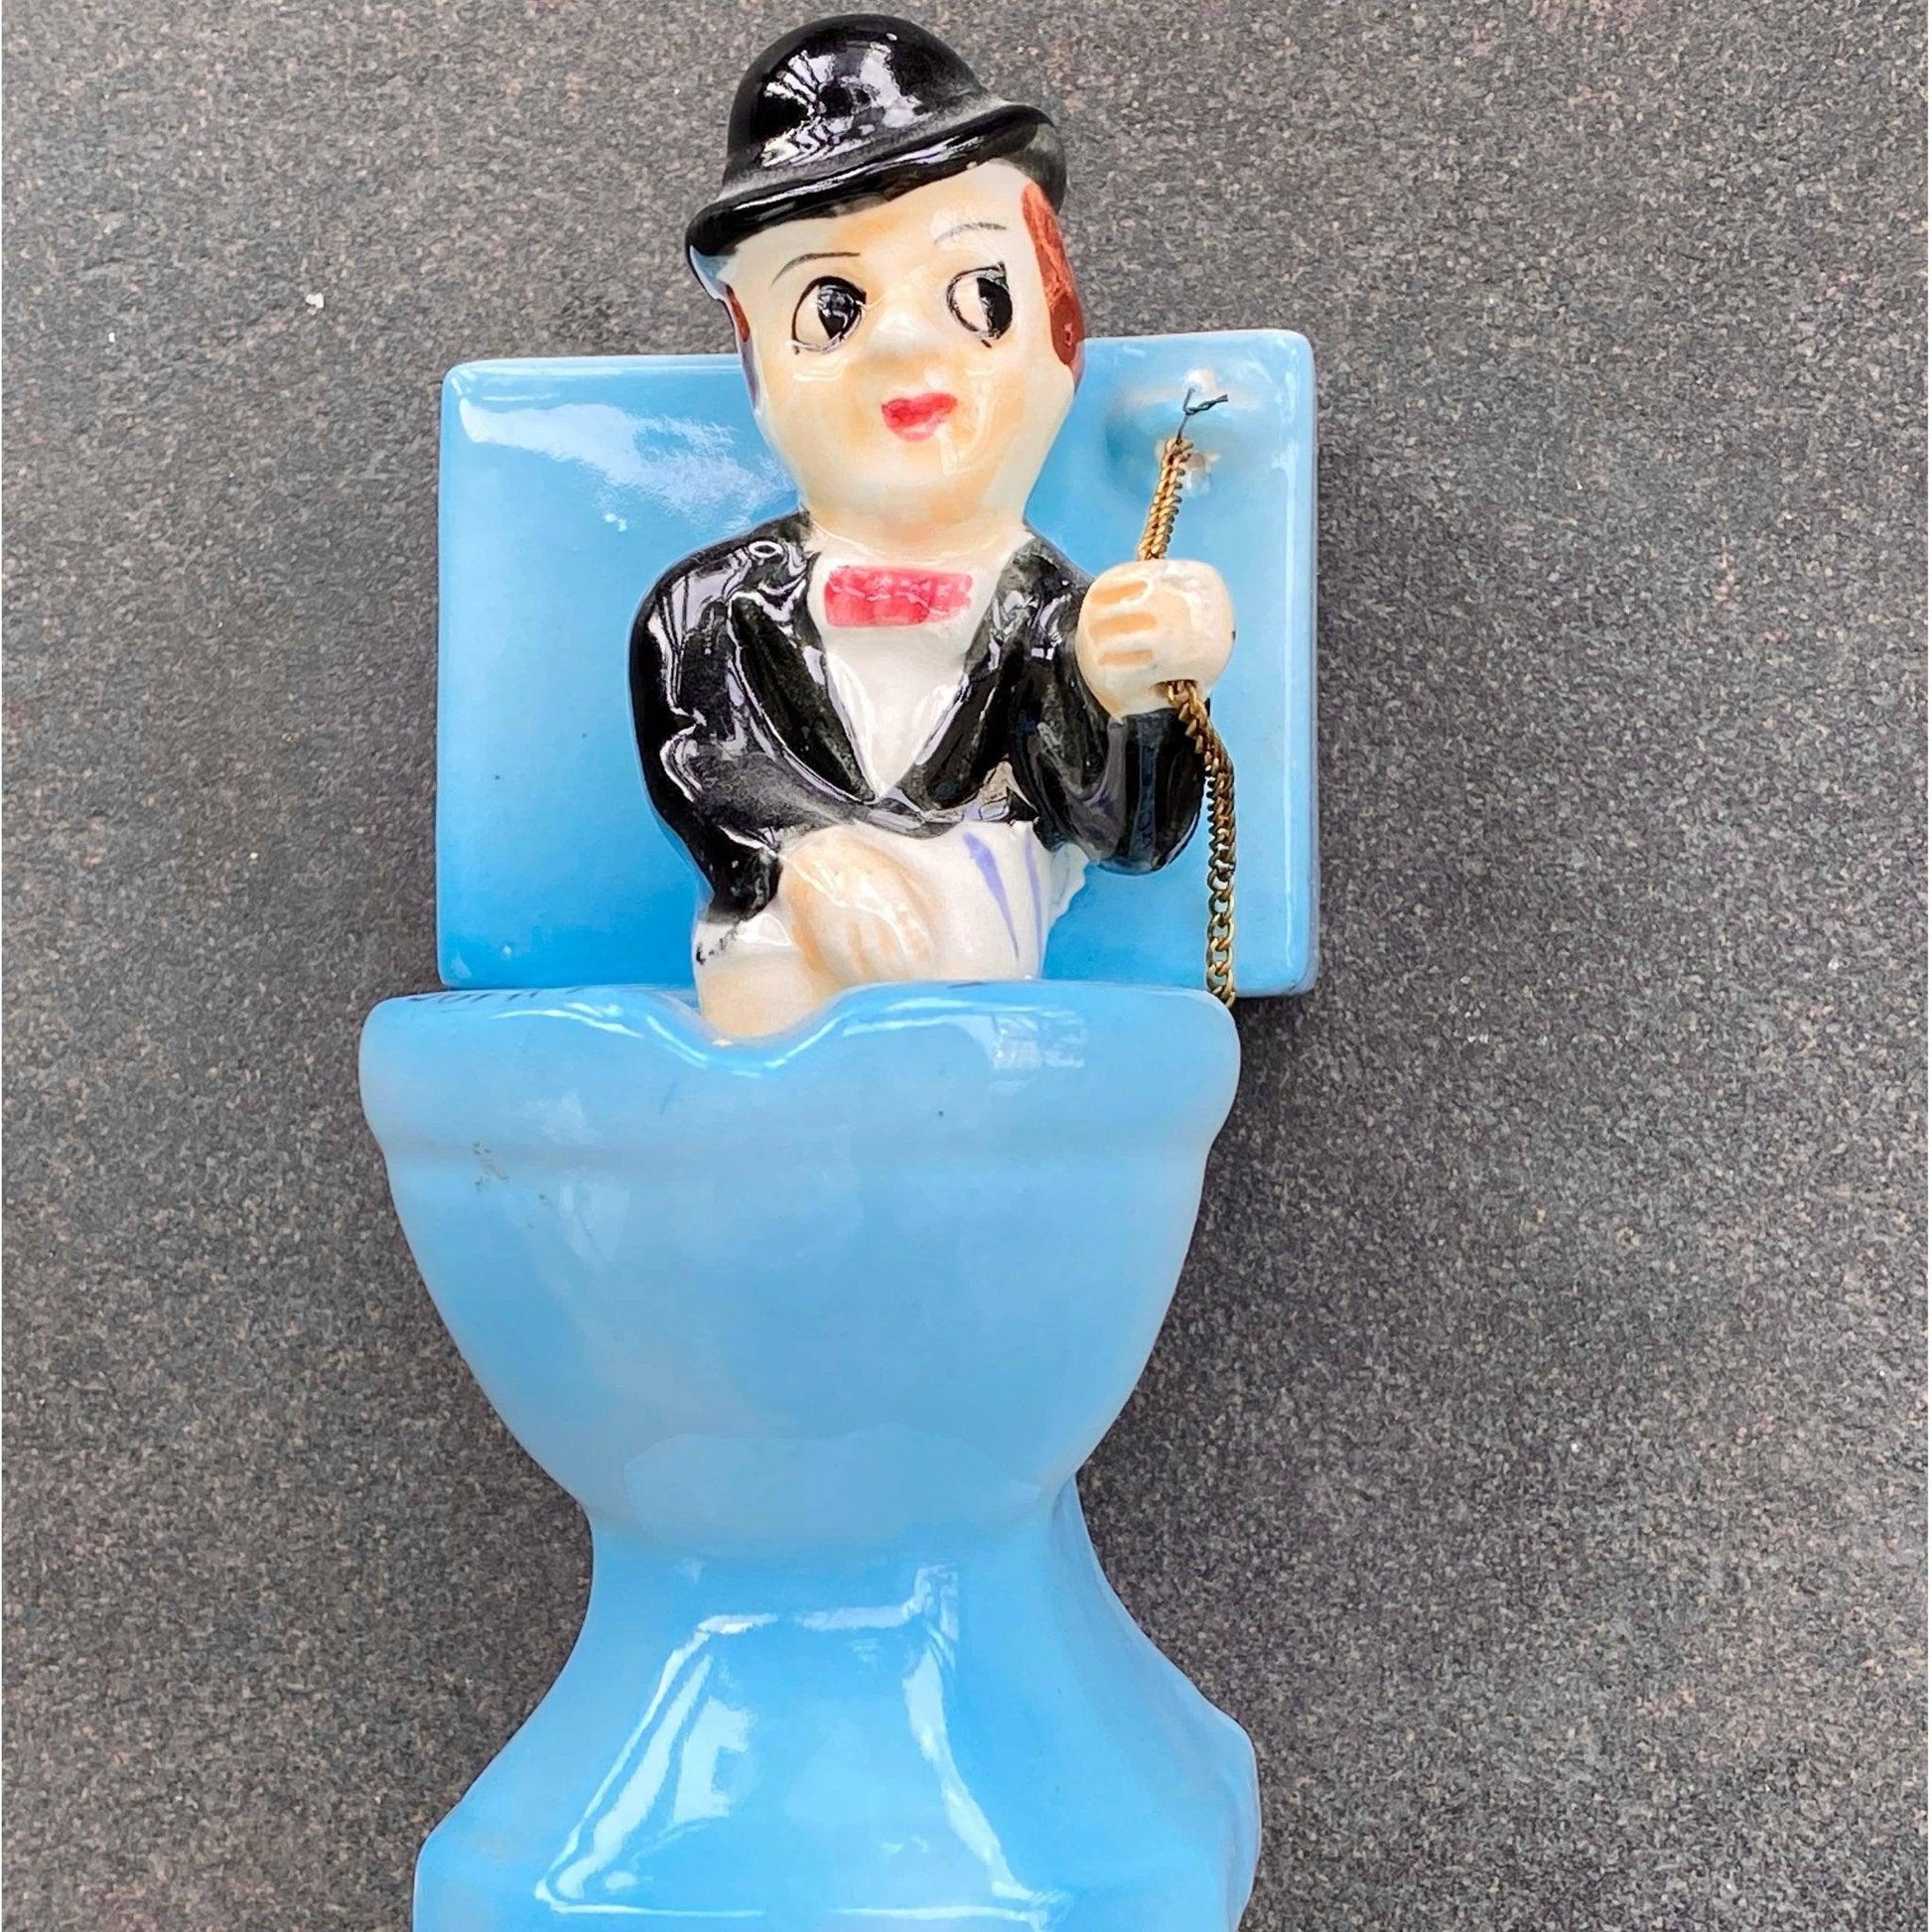 Rare Vintage Ceramic Man on Toilet Figural